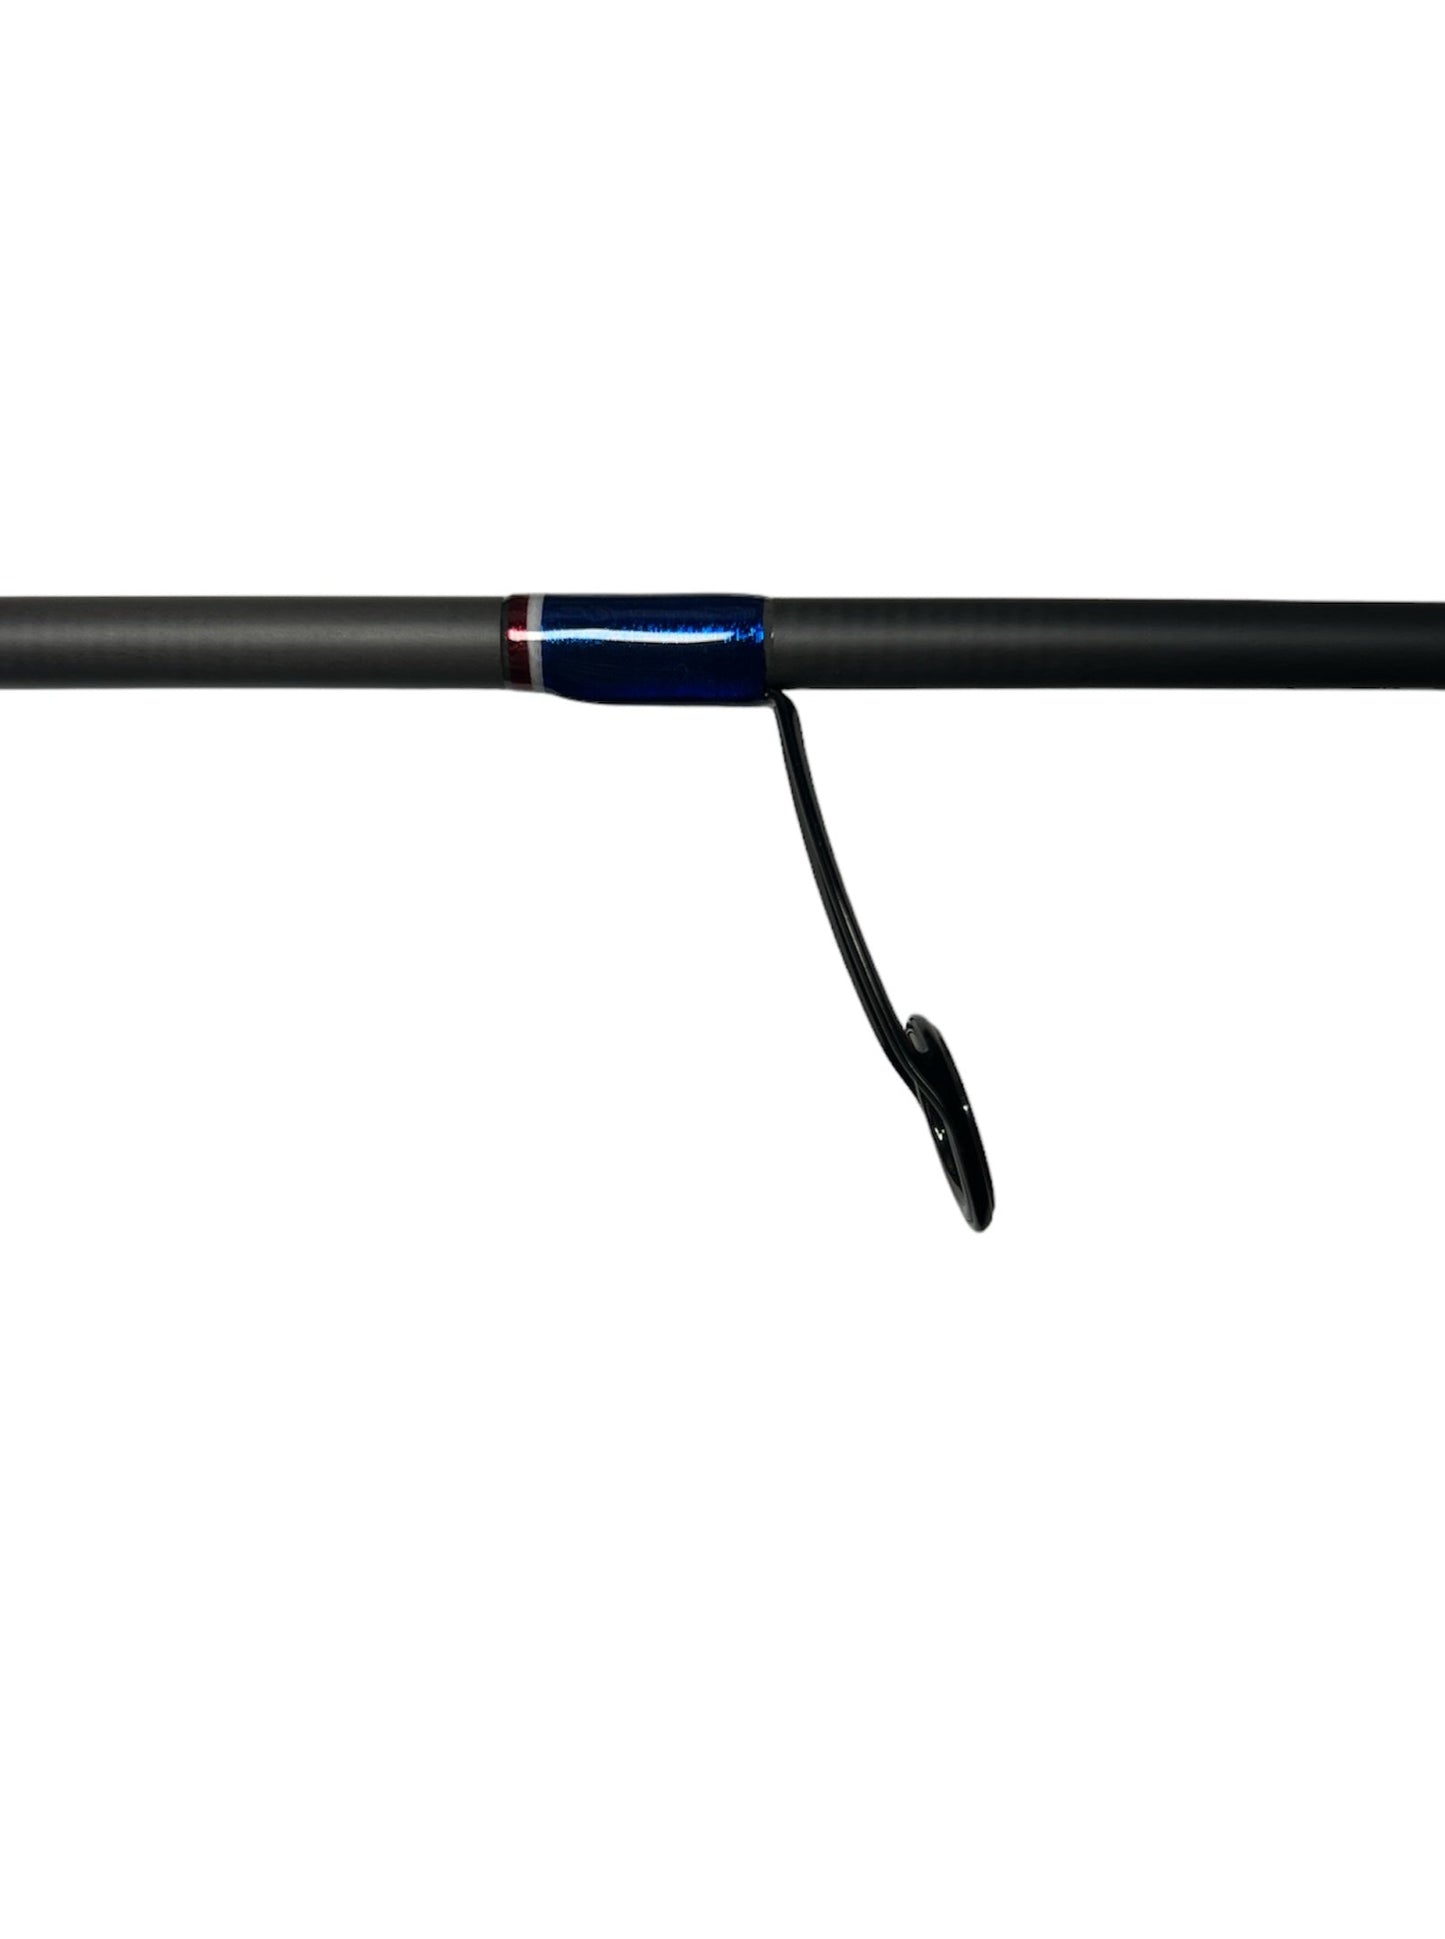 7'6' USA Med-Light Power Fast Action Versa Series Pre-Built Spinning Rod